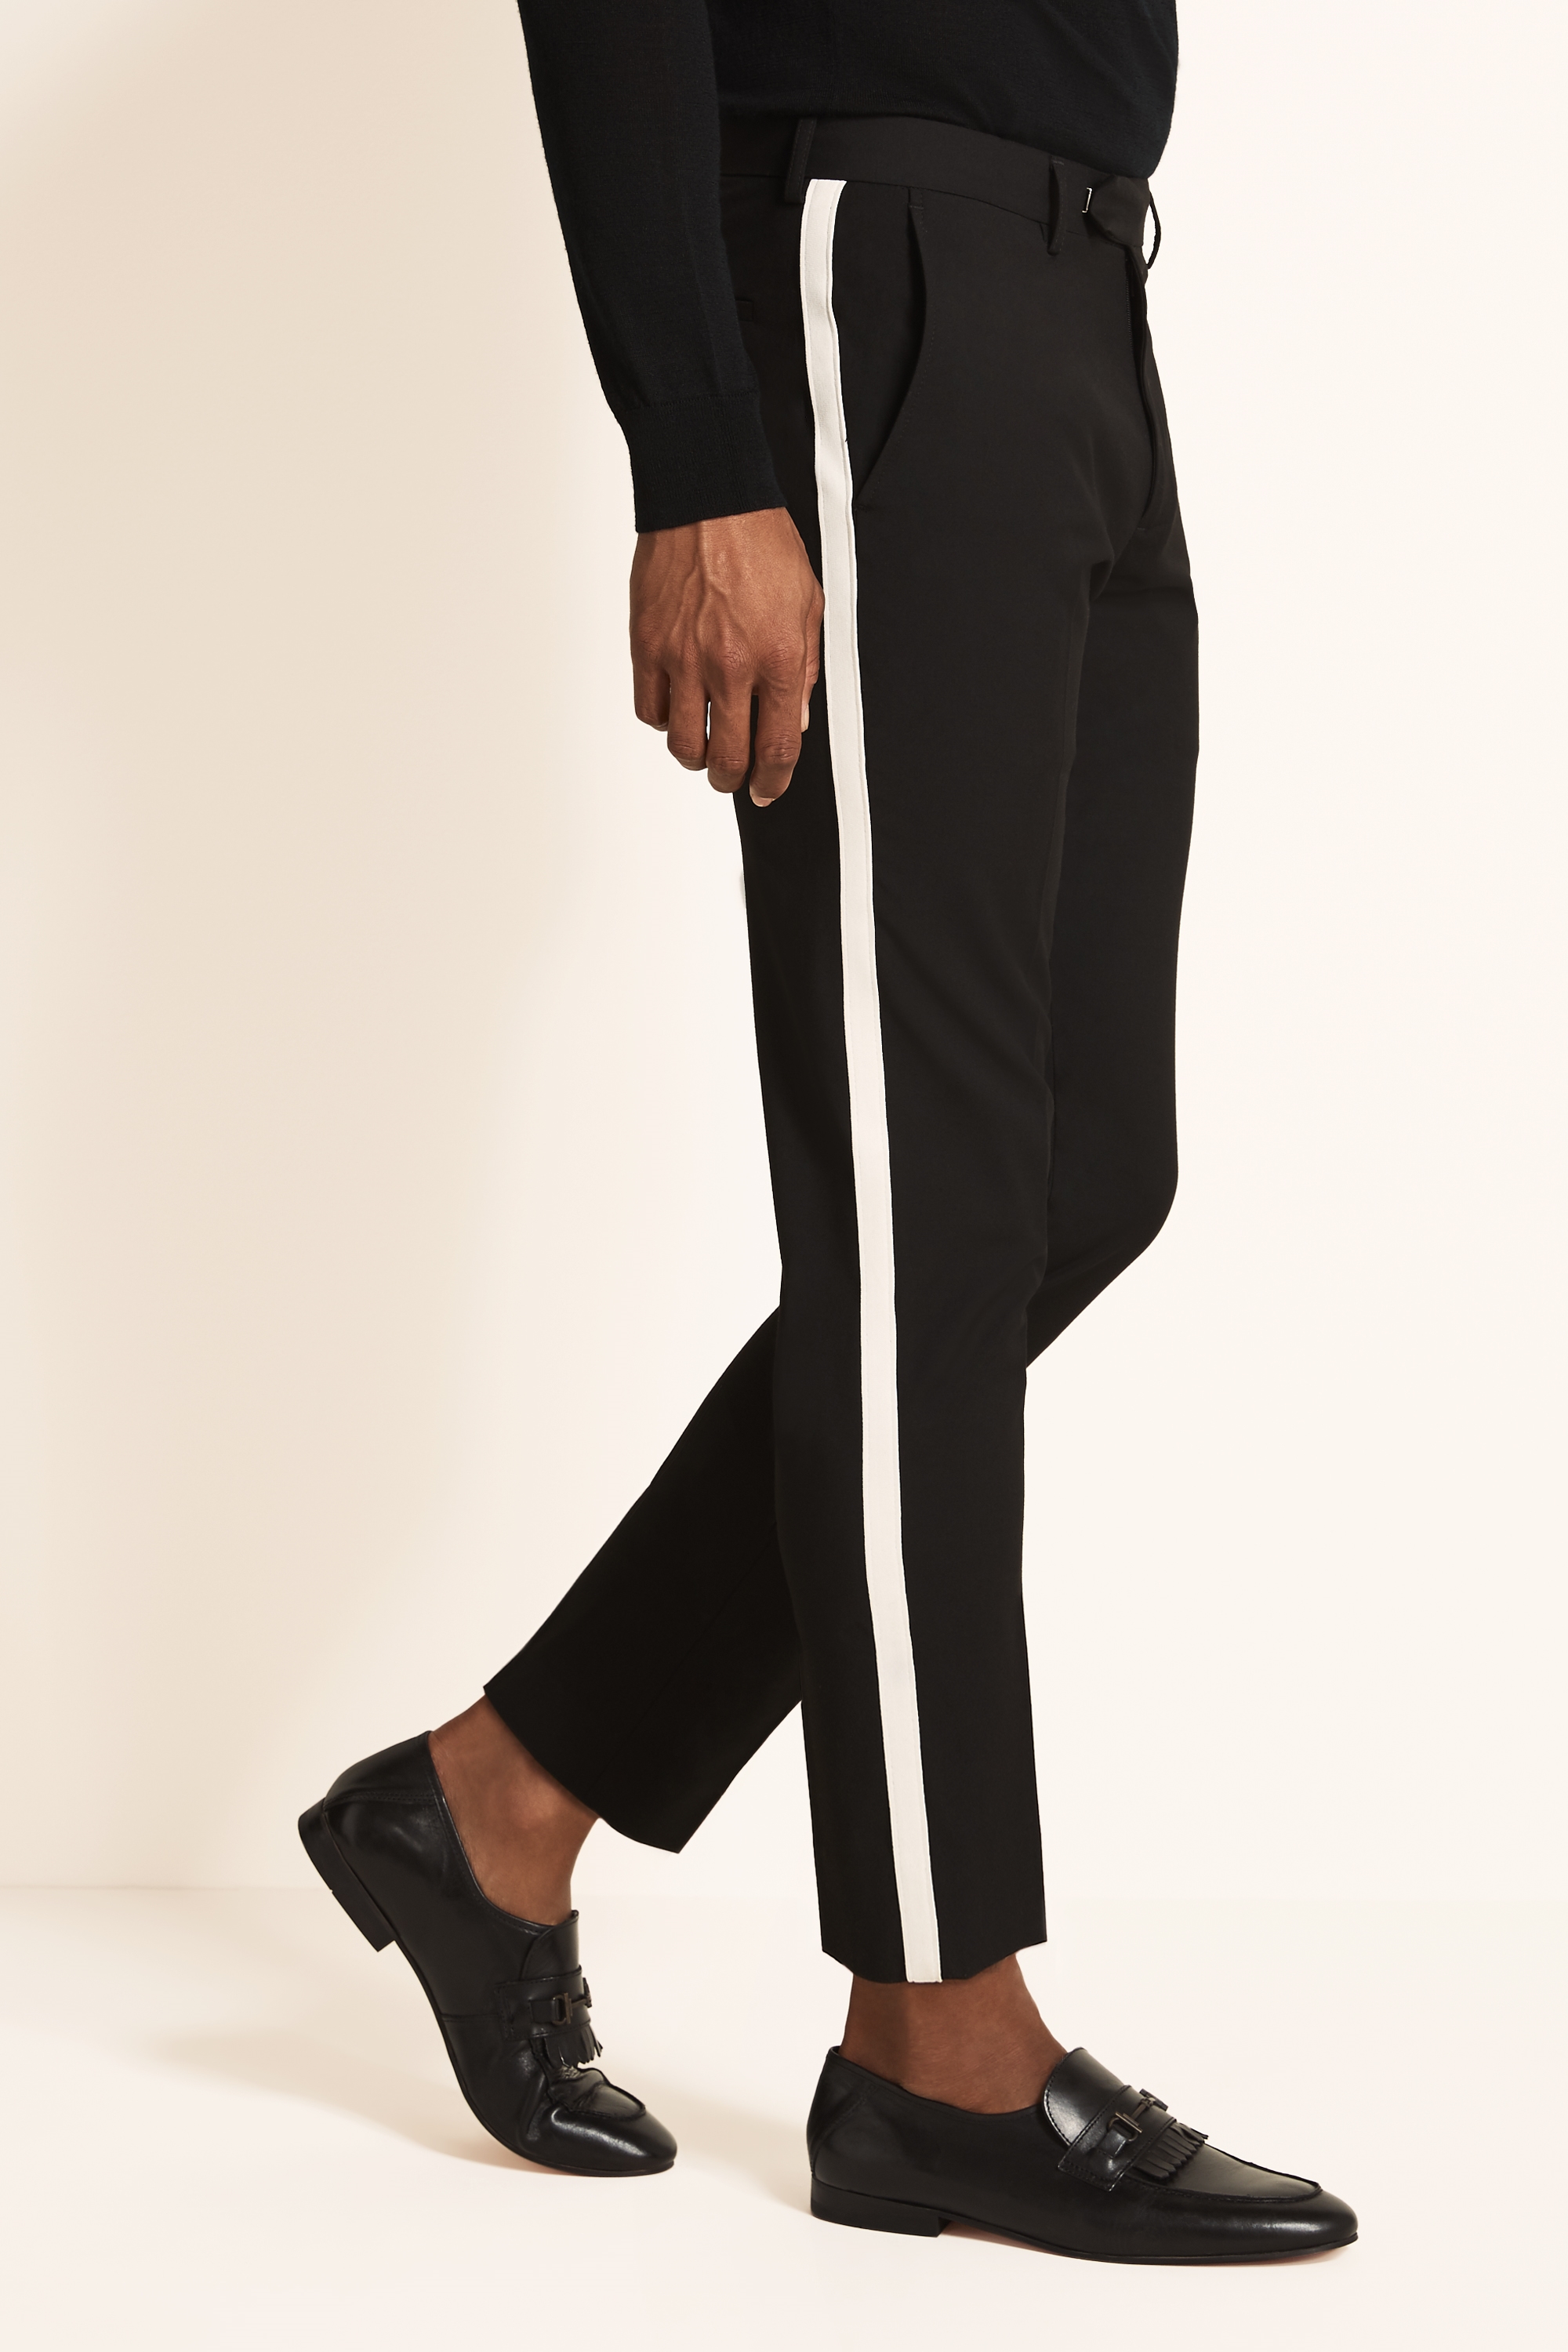 black skinny capri pants